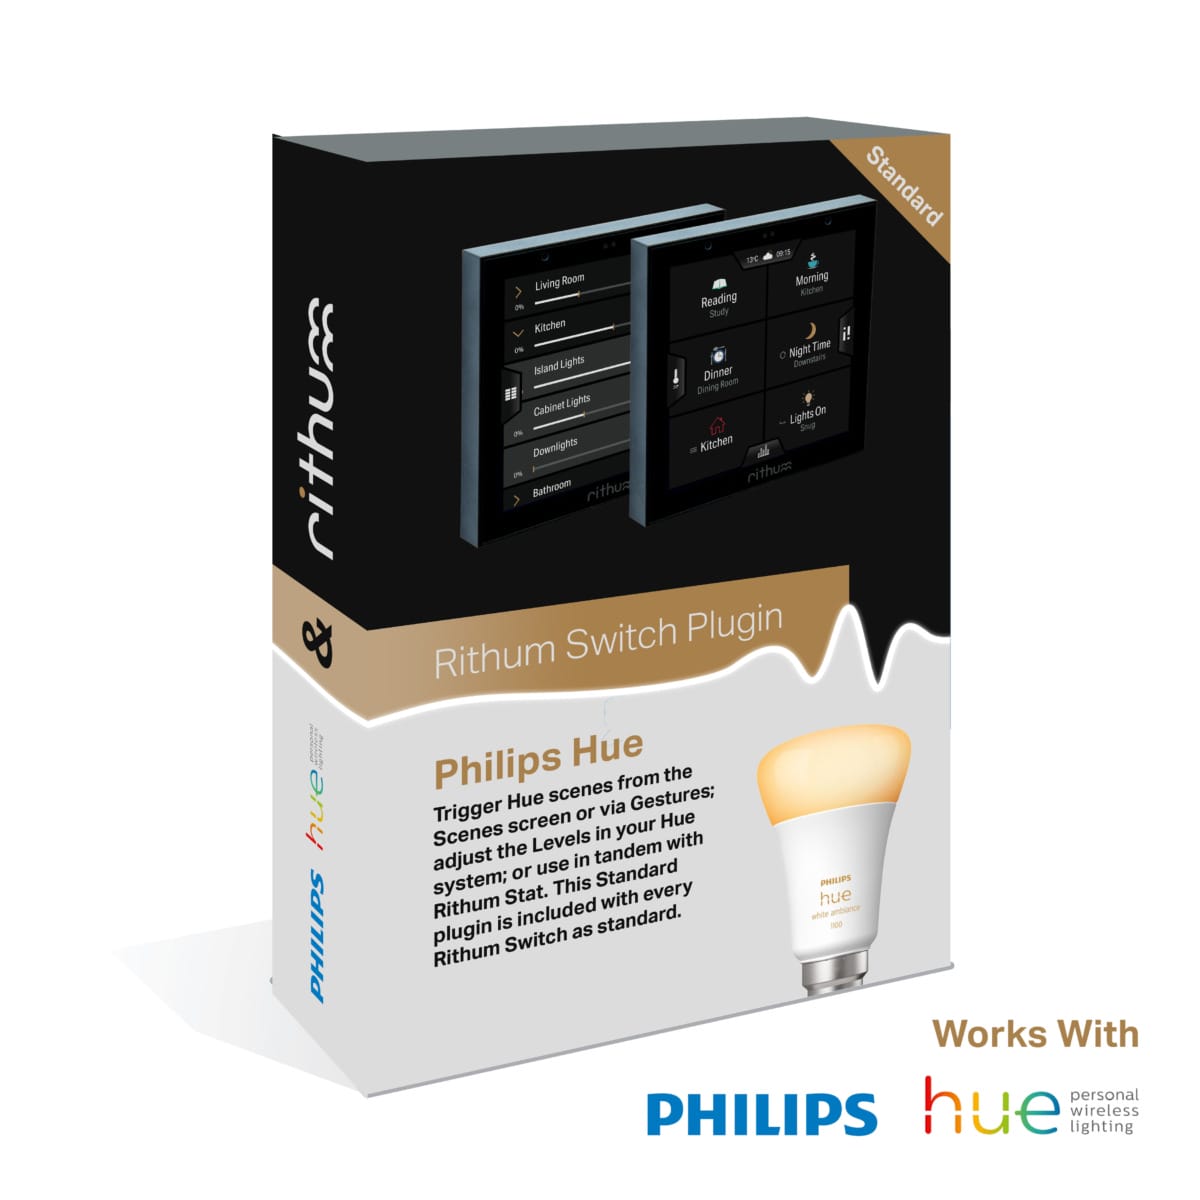 Rithum Philips Hue Plugin Box Front